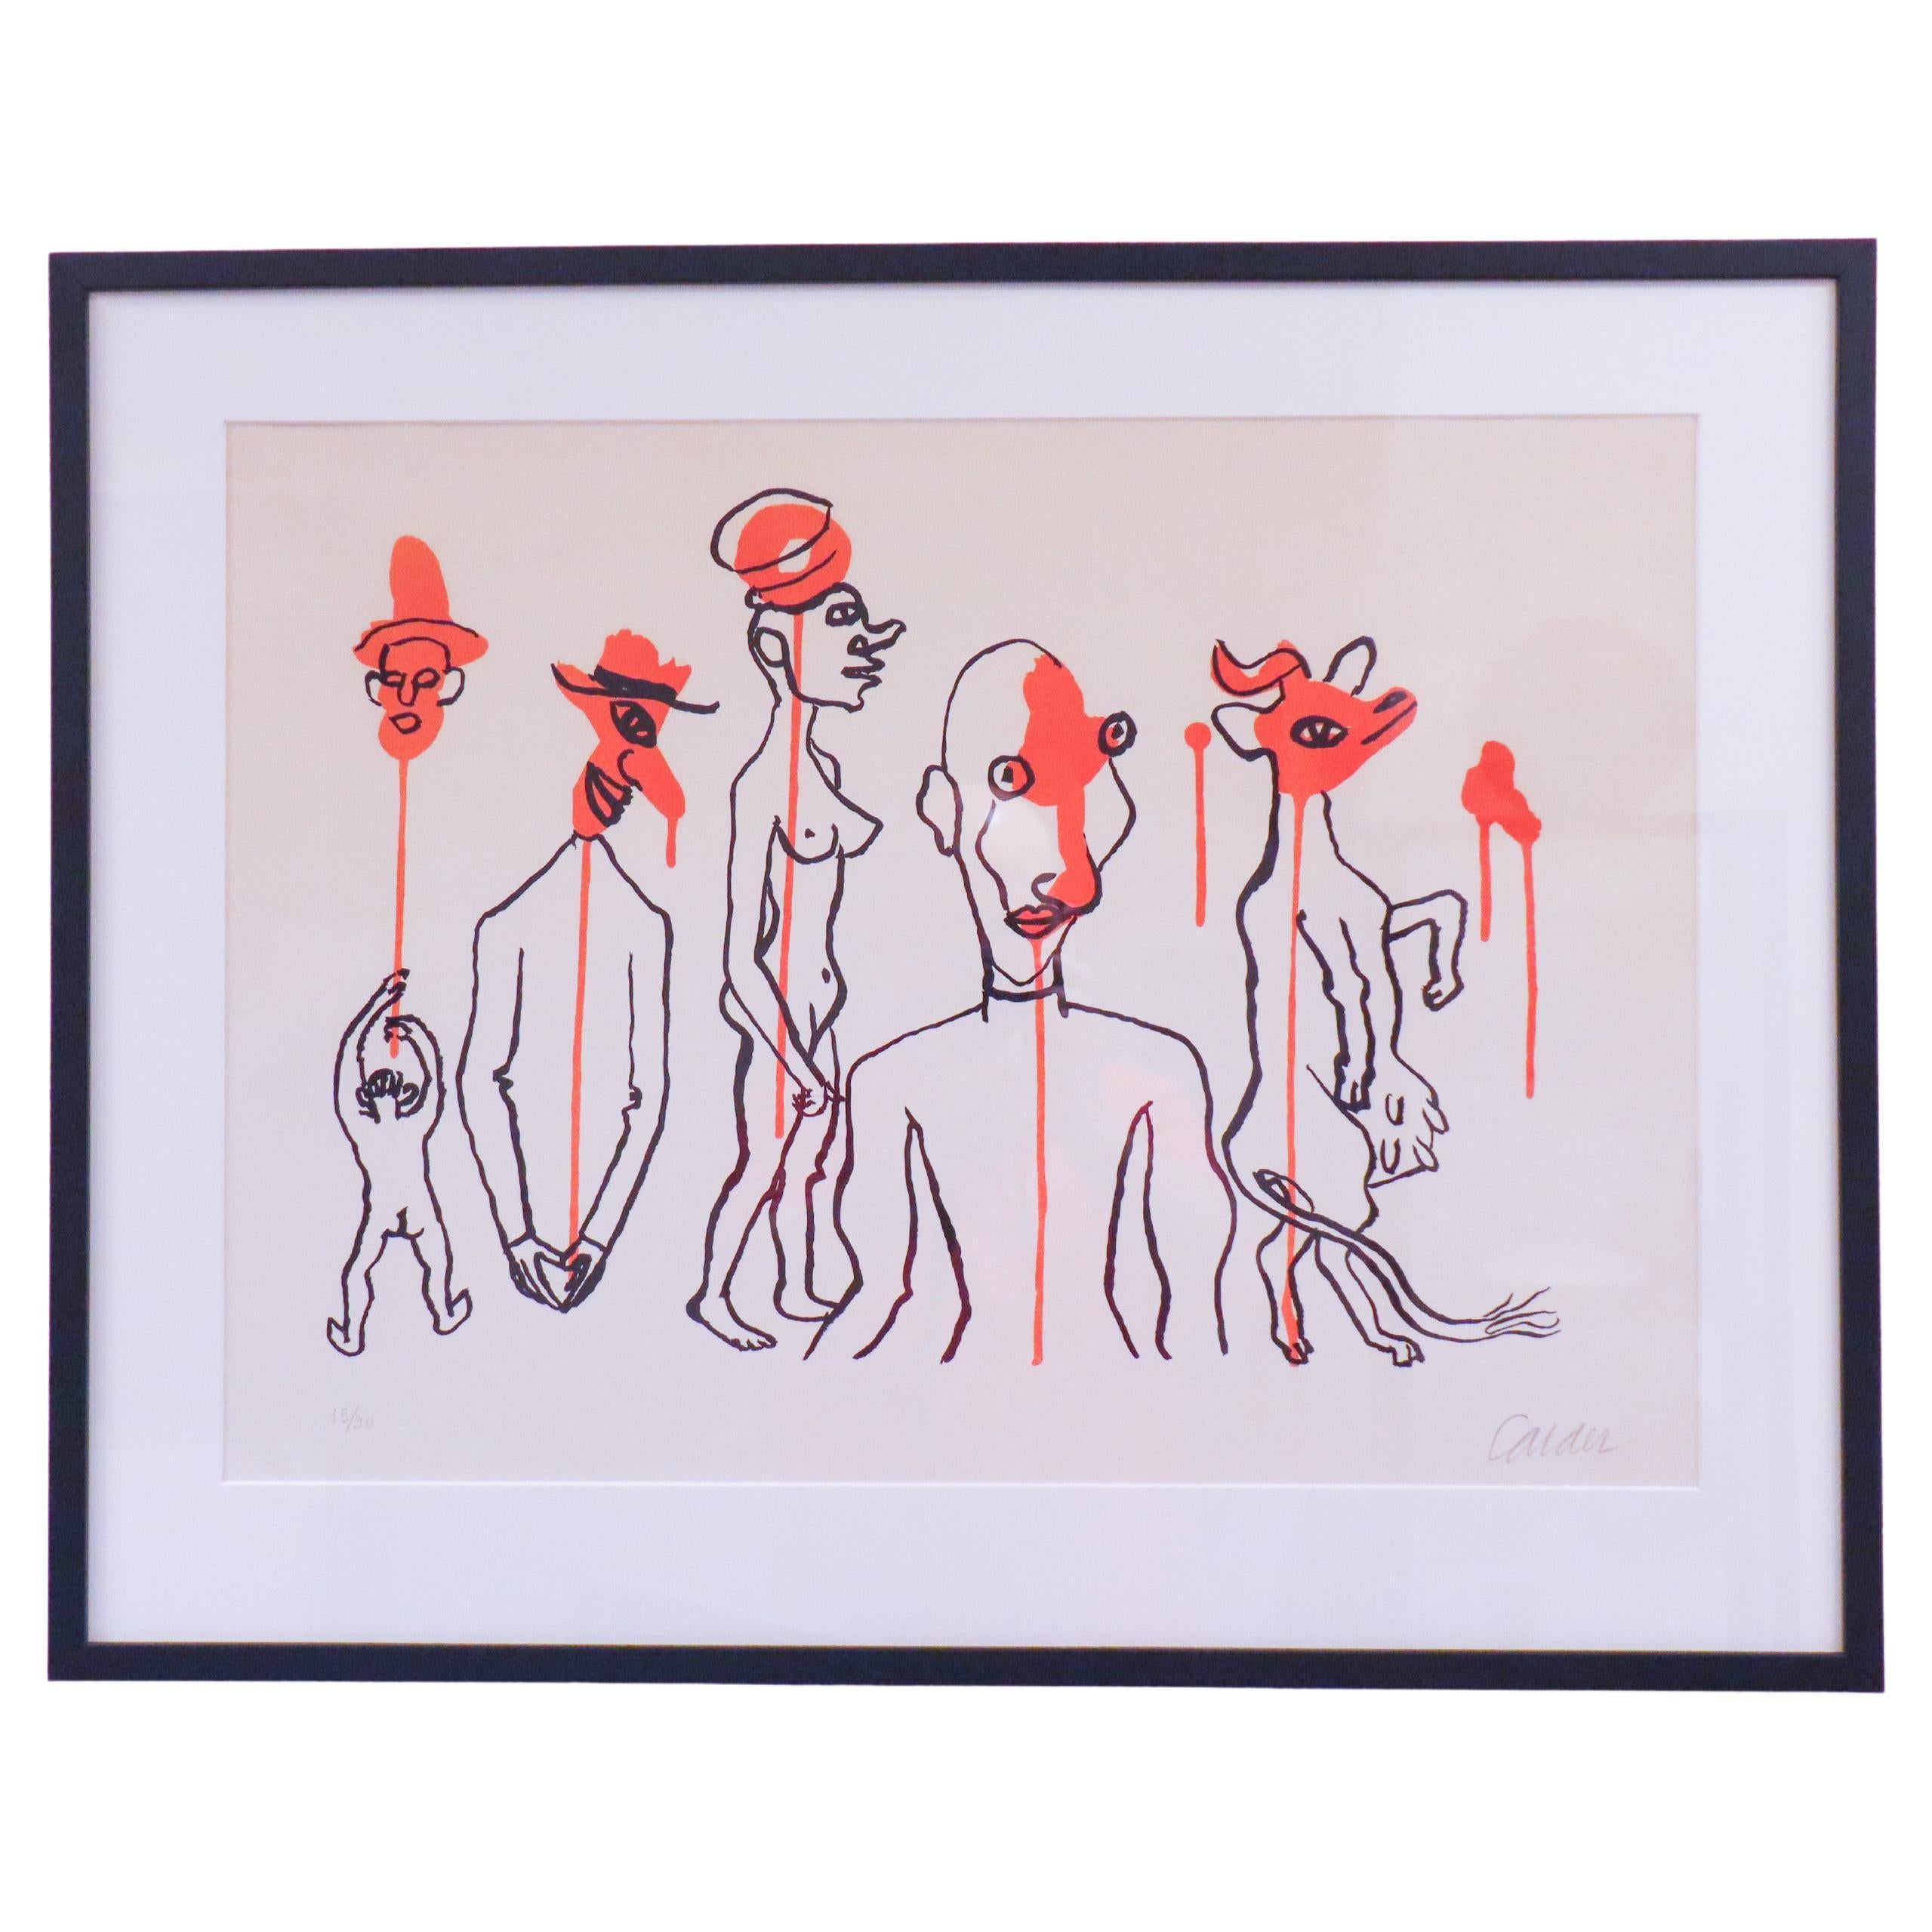 Alexander Calder, Original Lithograph 15/90, Les Queles Deqoulinantes 1966